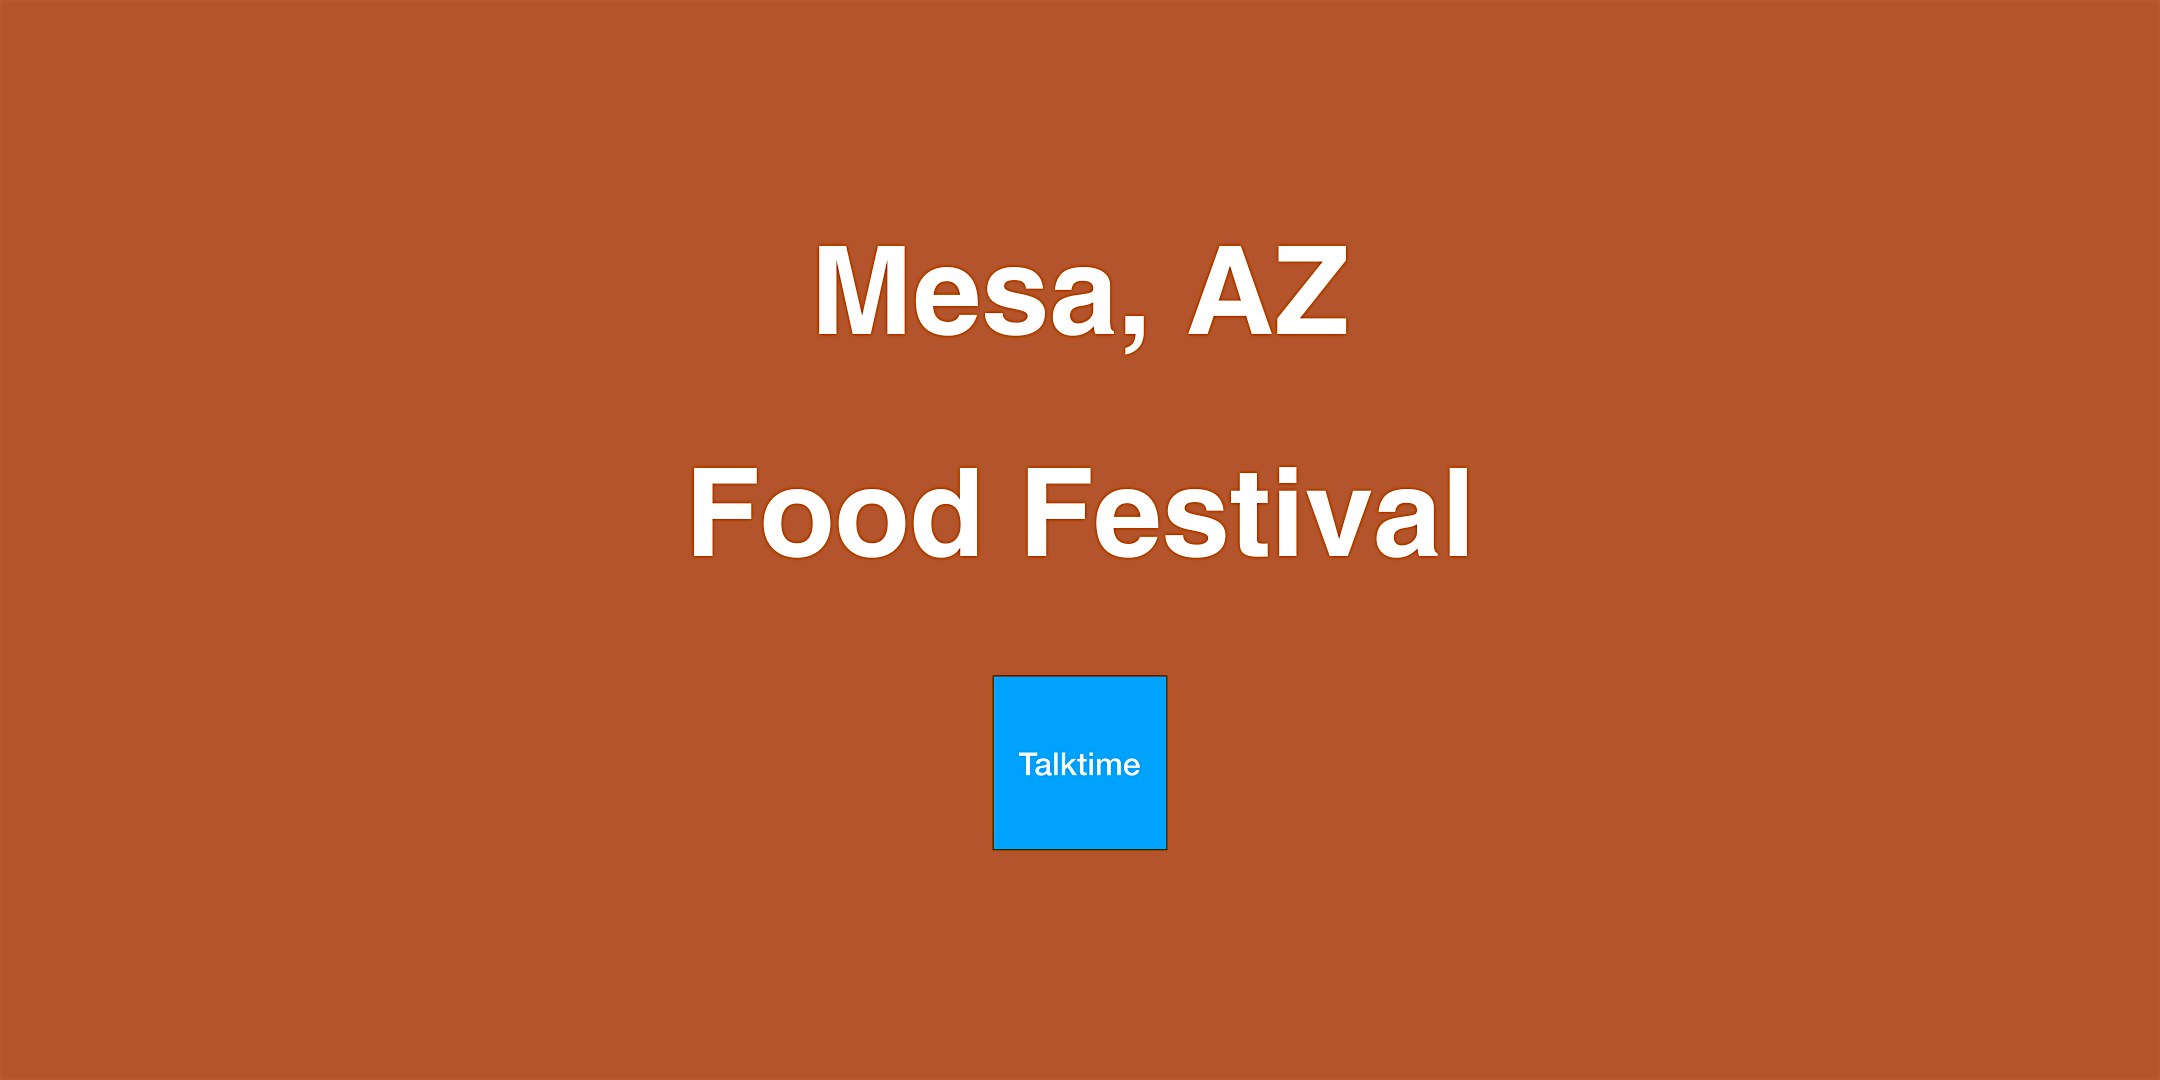 Food Festival - Mesa